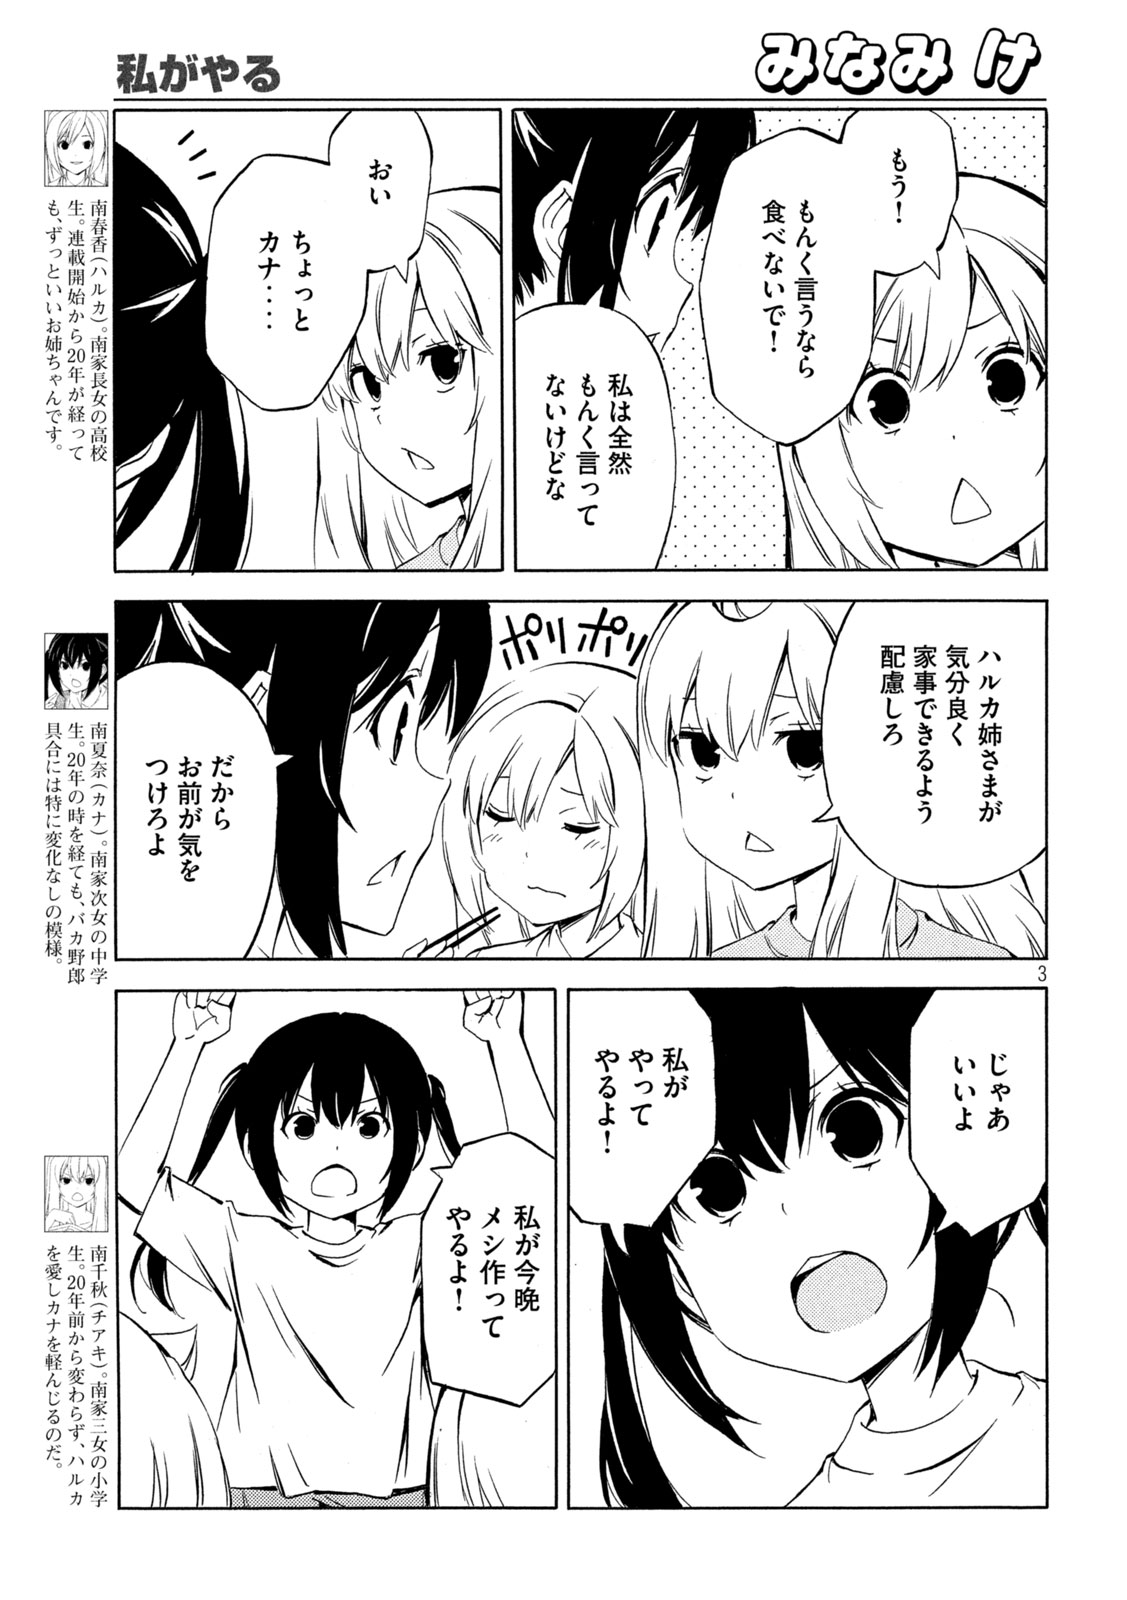 Minami-ke - Chapter 485 - Page 3